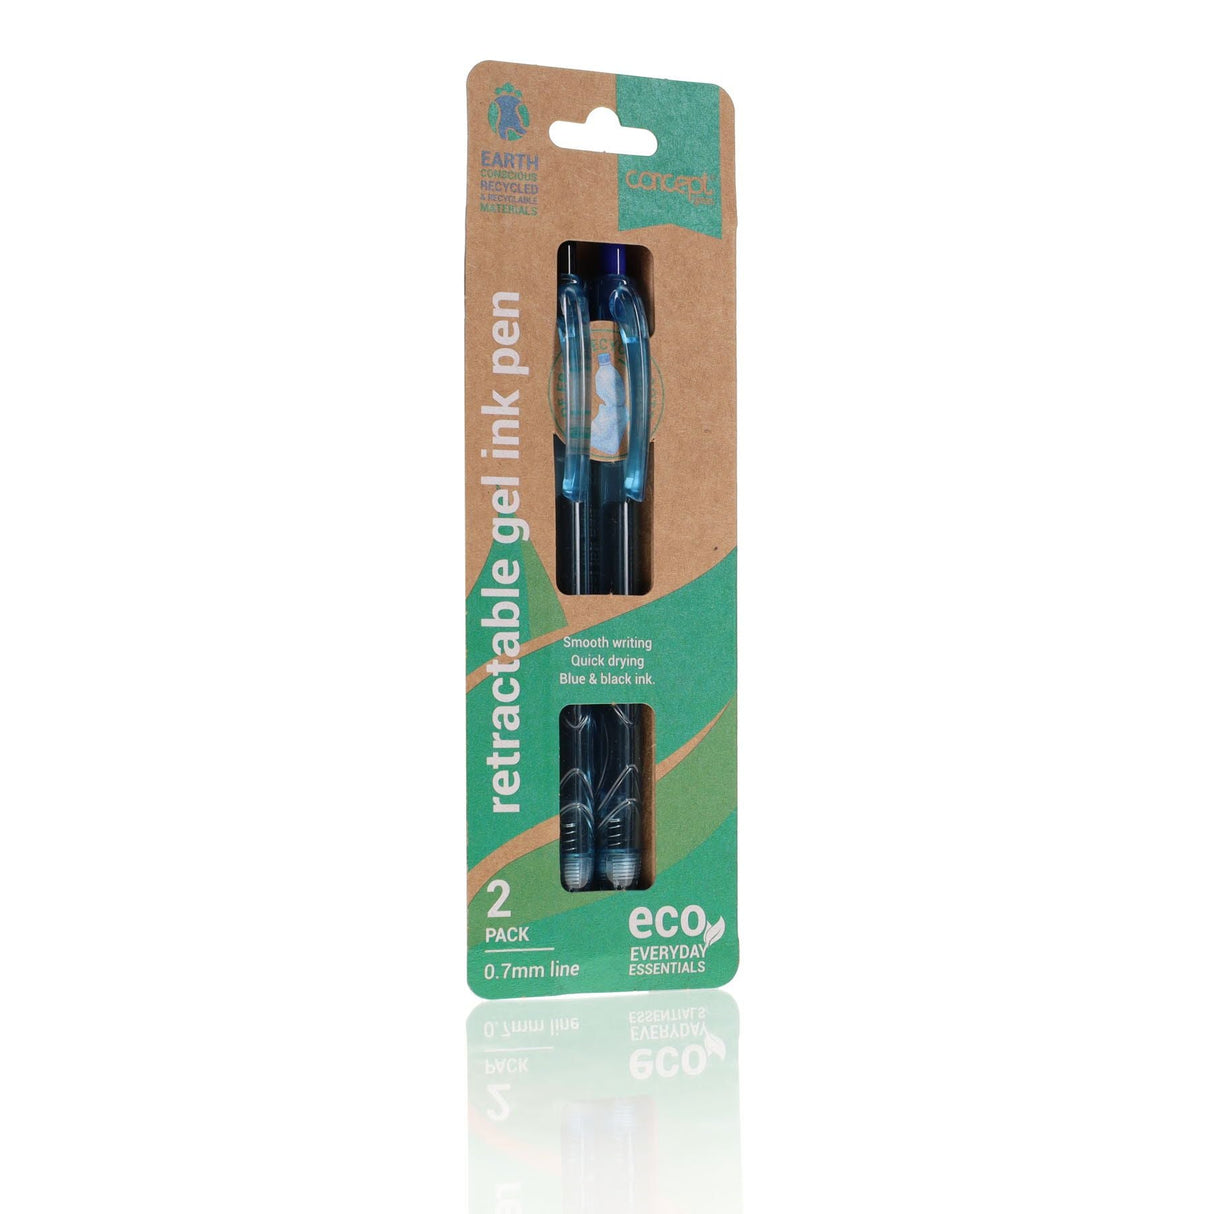 Concept Green Retractable Gel Ink Pen - 0.7mm - Pack of 2 | Stationery Shop UK